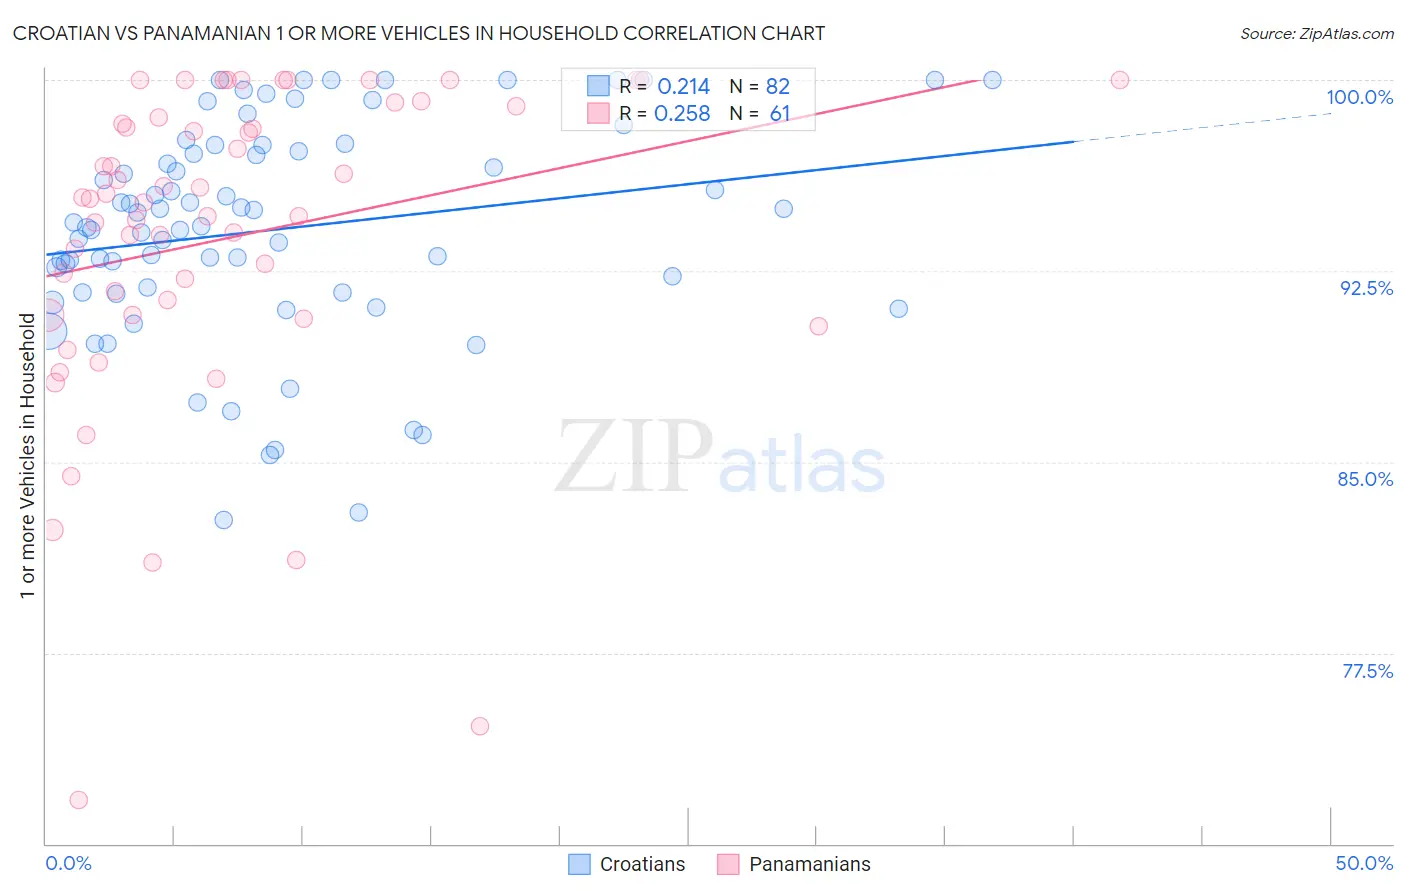 Croatian vs Panamanian 1 or more Vehicles in Household